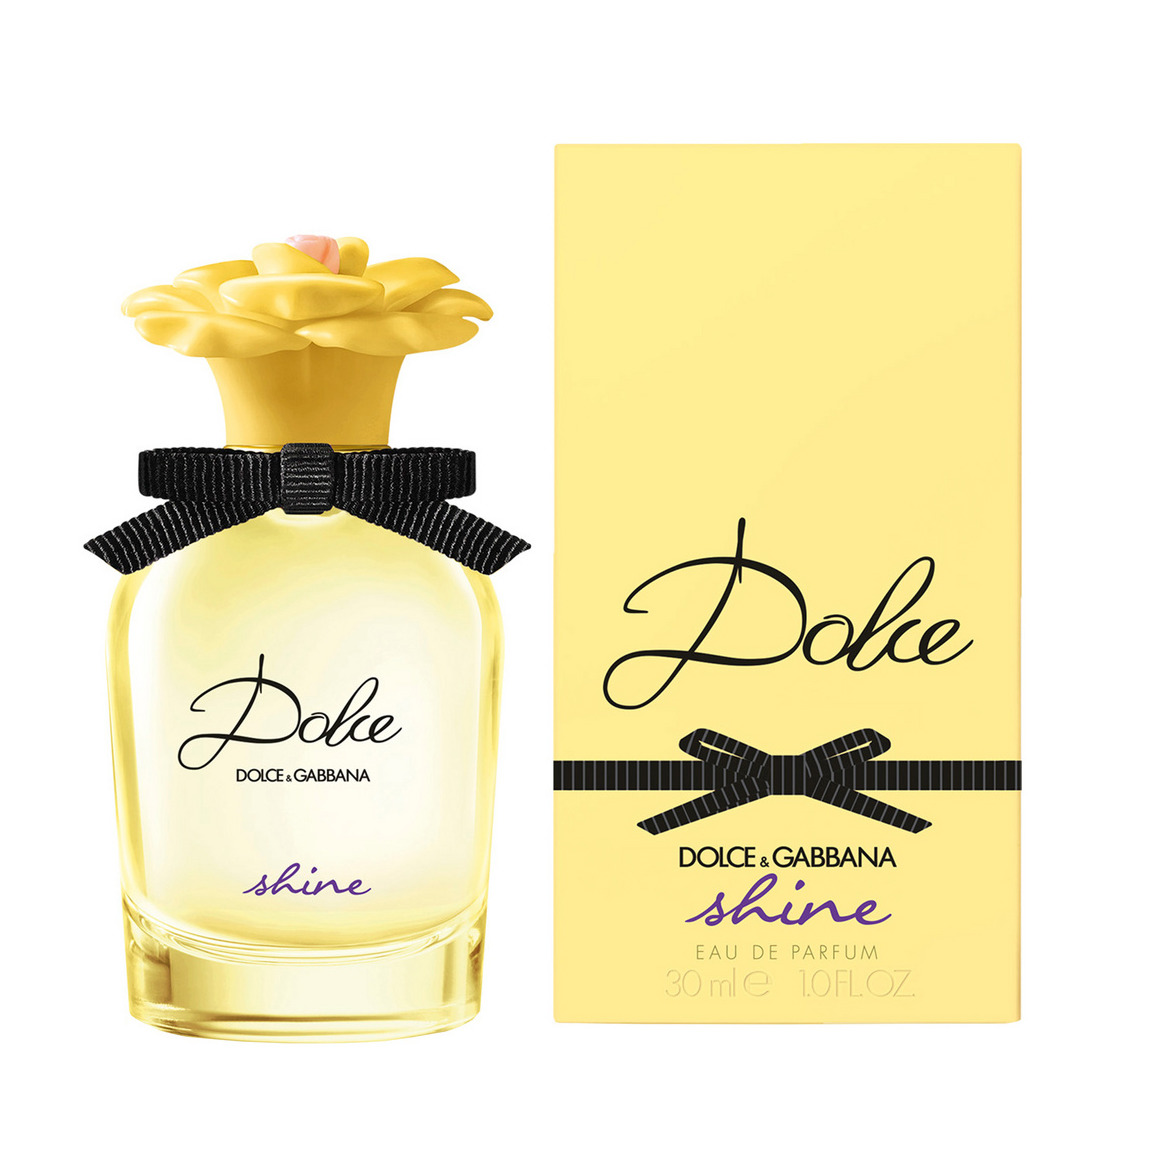 Dolce. Парфюмерная вода Dolce & Gabbana Dolce Peony. Dolce&Gabbana Dolce Garden Lady 50ml EDP. Dolce & Gabbana Dolce Shine 50. Дольче Габбана роза Excelsa.